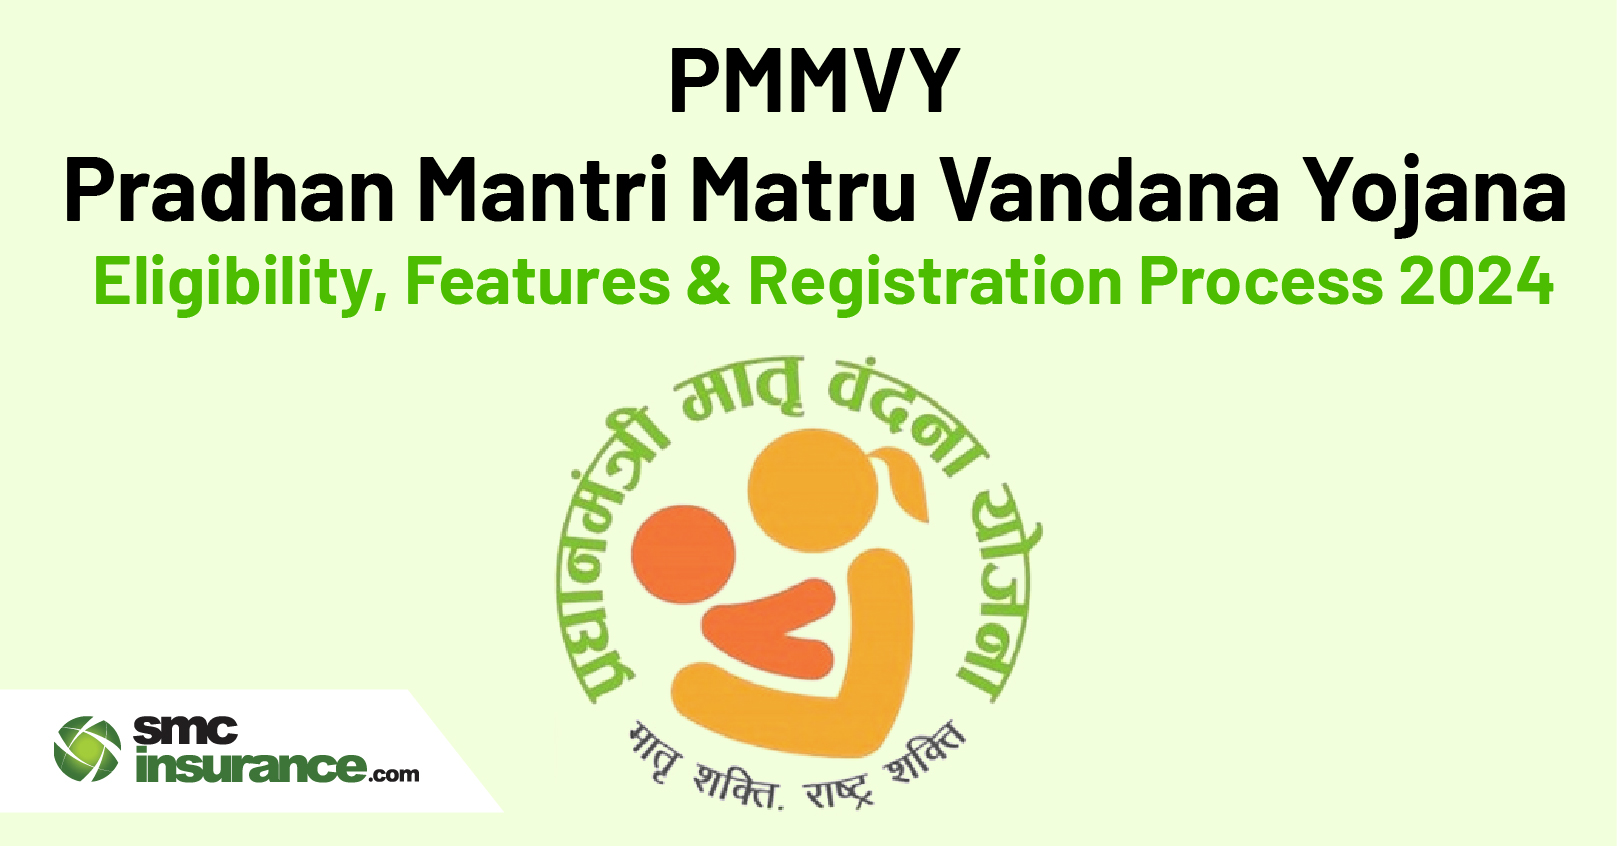 PMMVY: Pradhan Mantri Matru Vandana Yojana - Eligibility, Features & Registration Process 2024